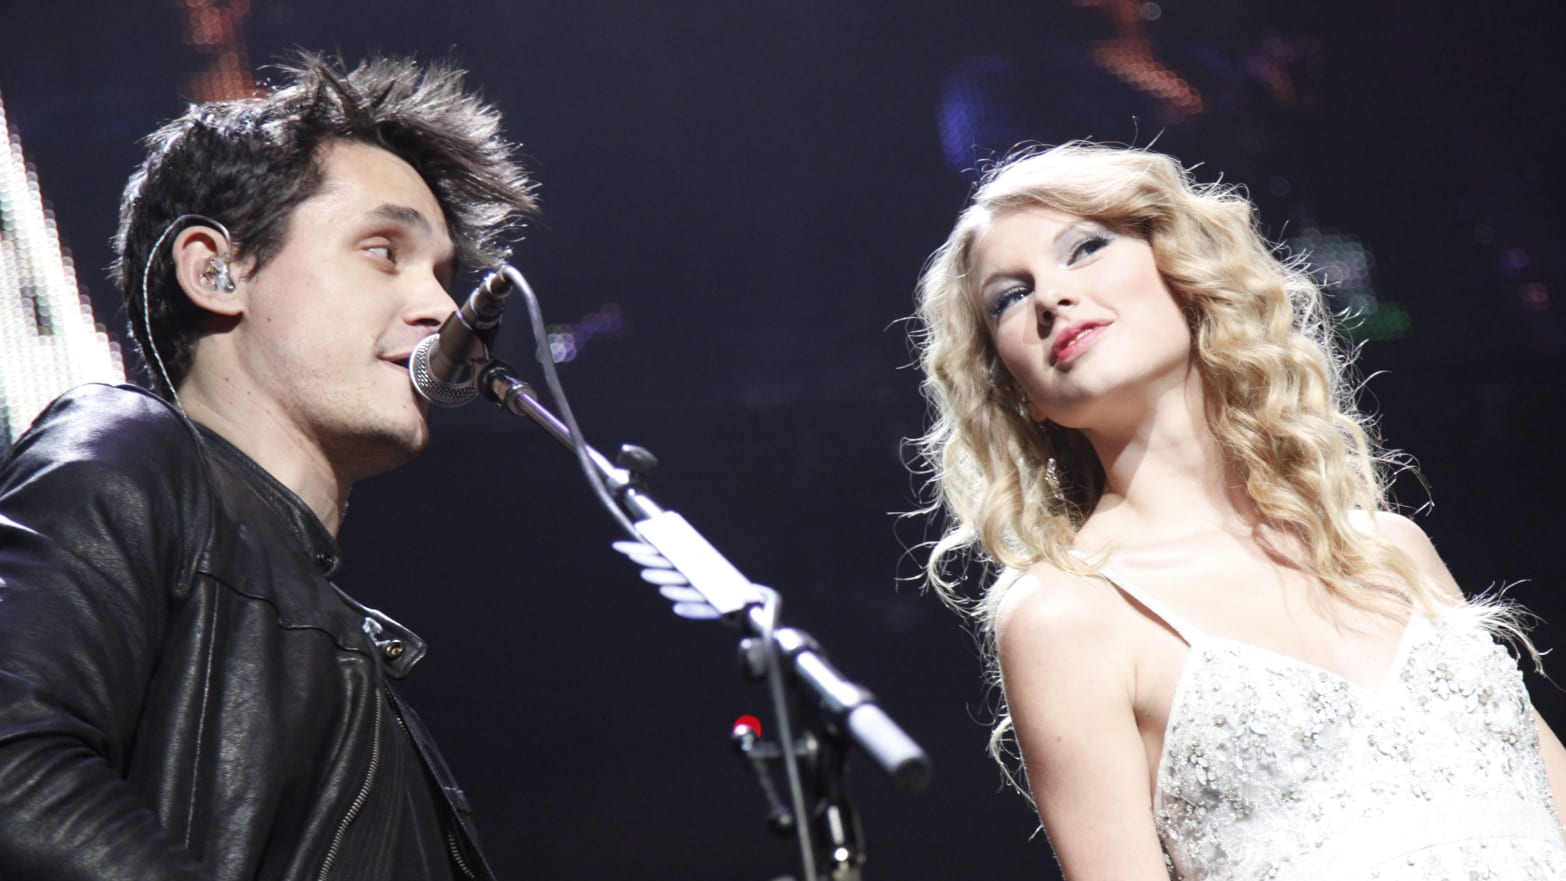 John Mayer and Taylor Swift at the Z100 JINGLE BALL 2009